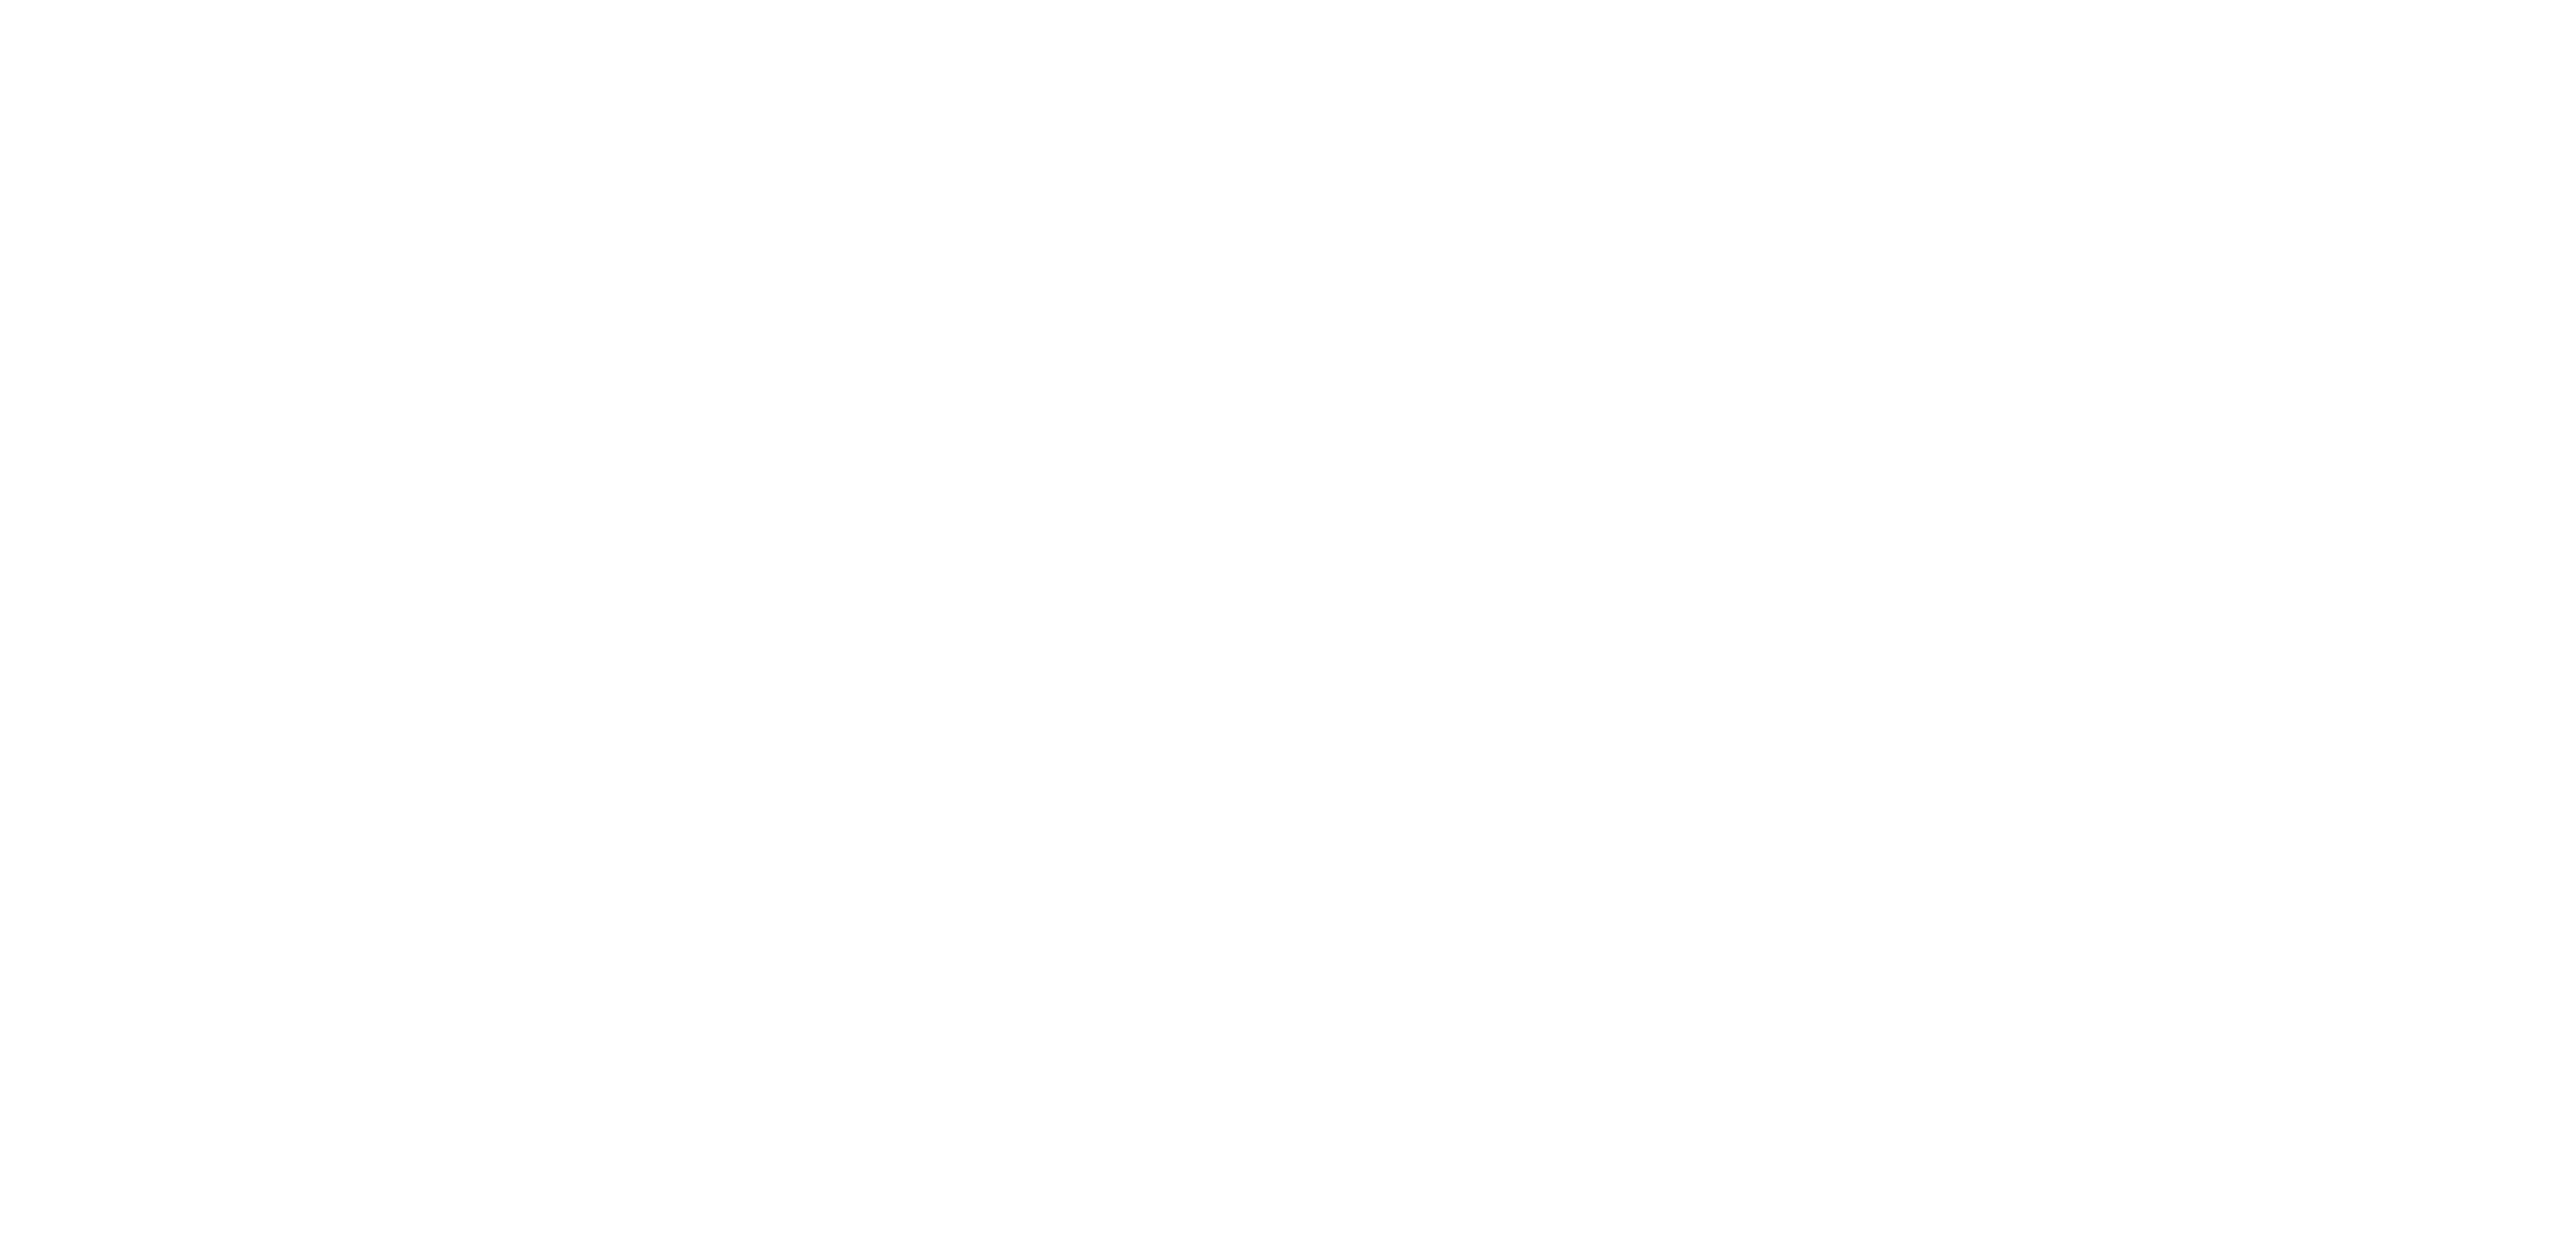 Smiling Friends logo